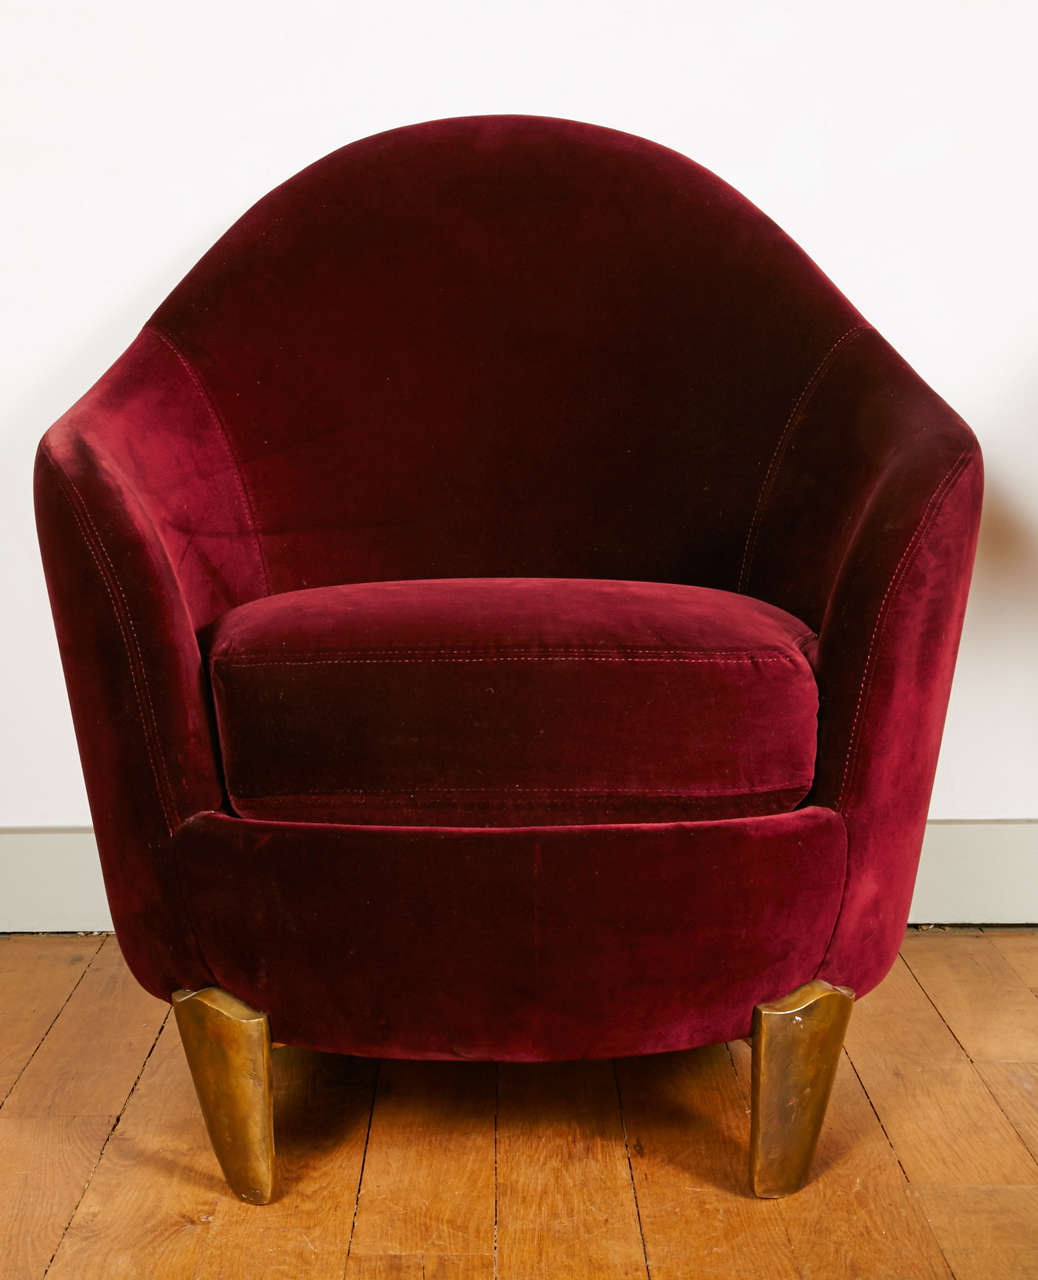 Famous Koala armchair by Garouste & Bonetti with a deep red velvet fabric. Signed on the BG on the foot